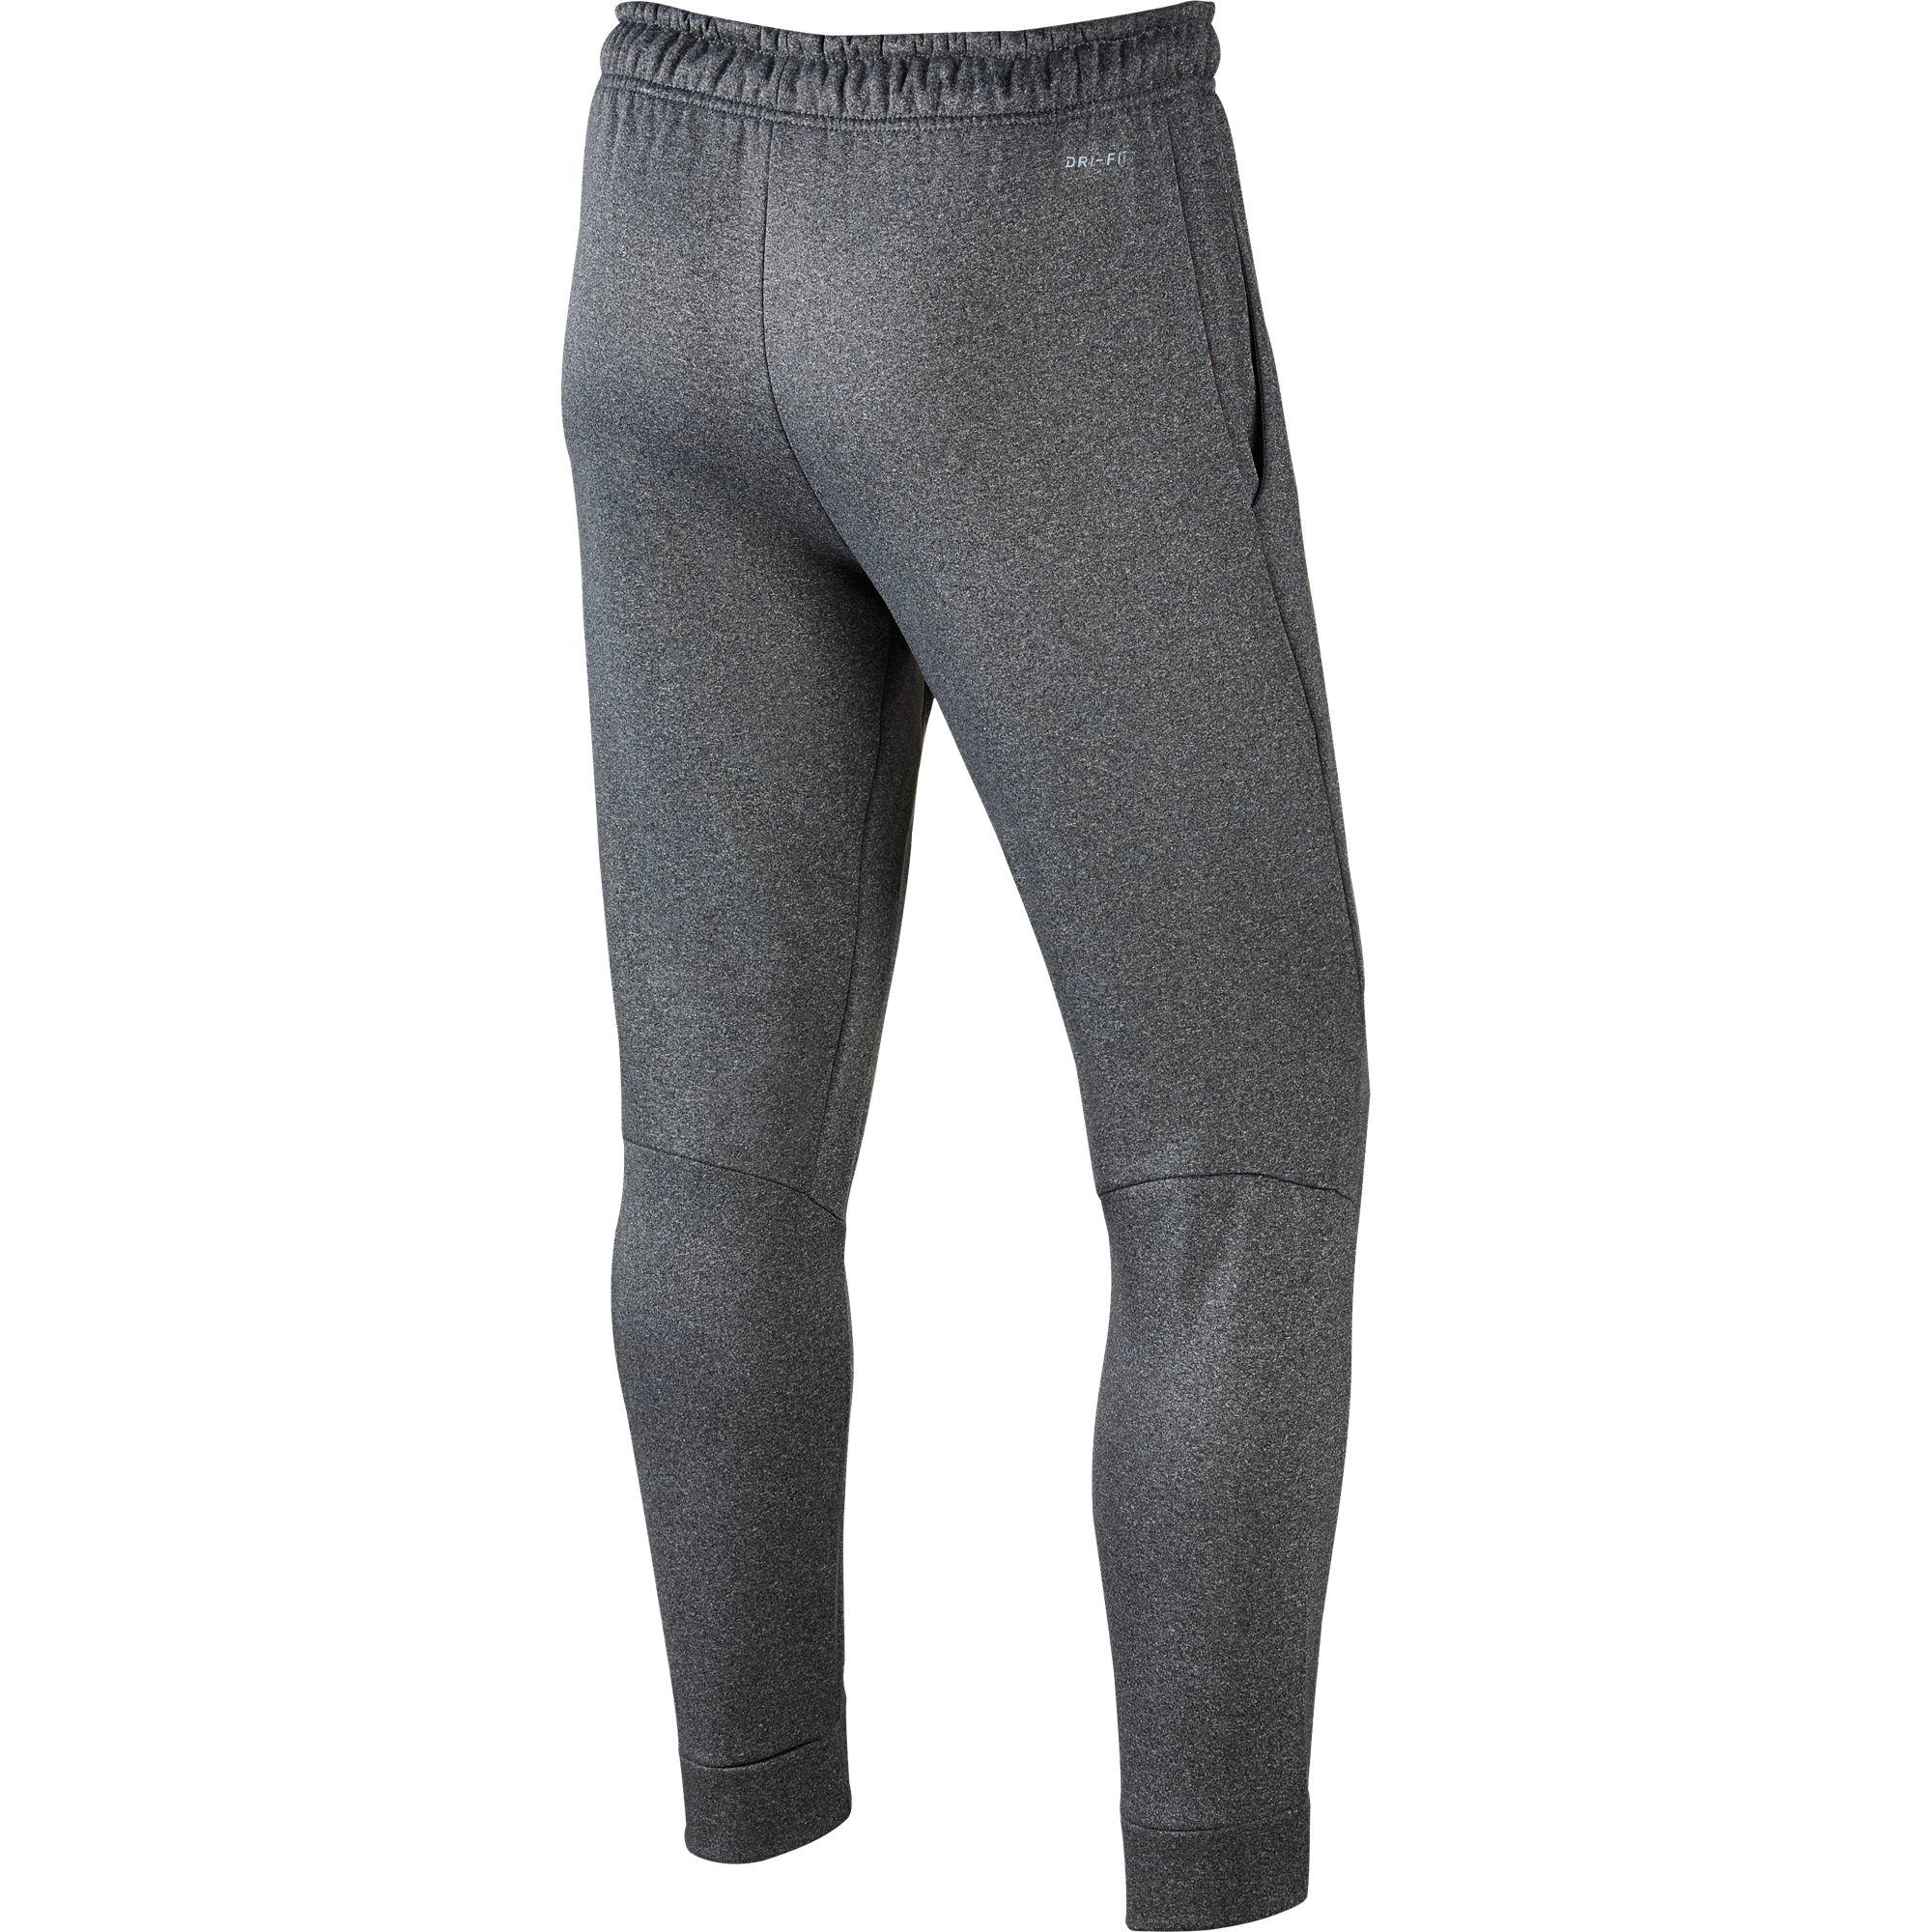 Nike Mens Therma Training Pants - Grey - Tennisnuts.com